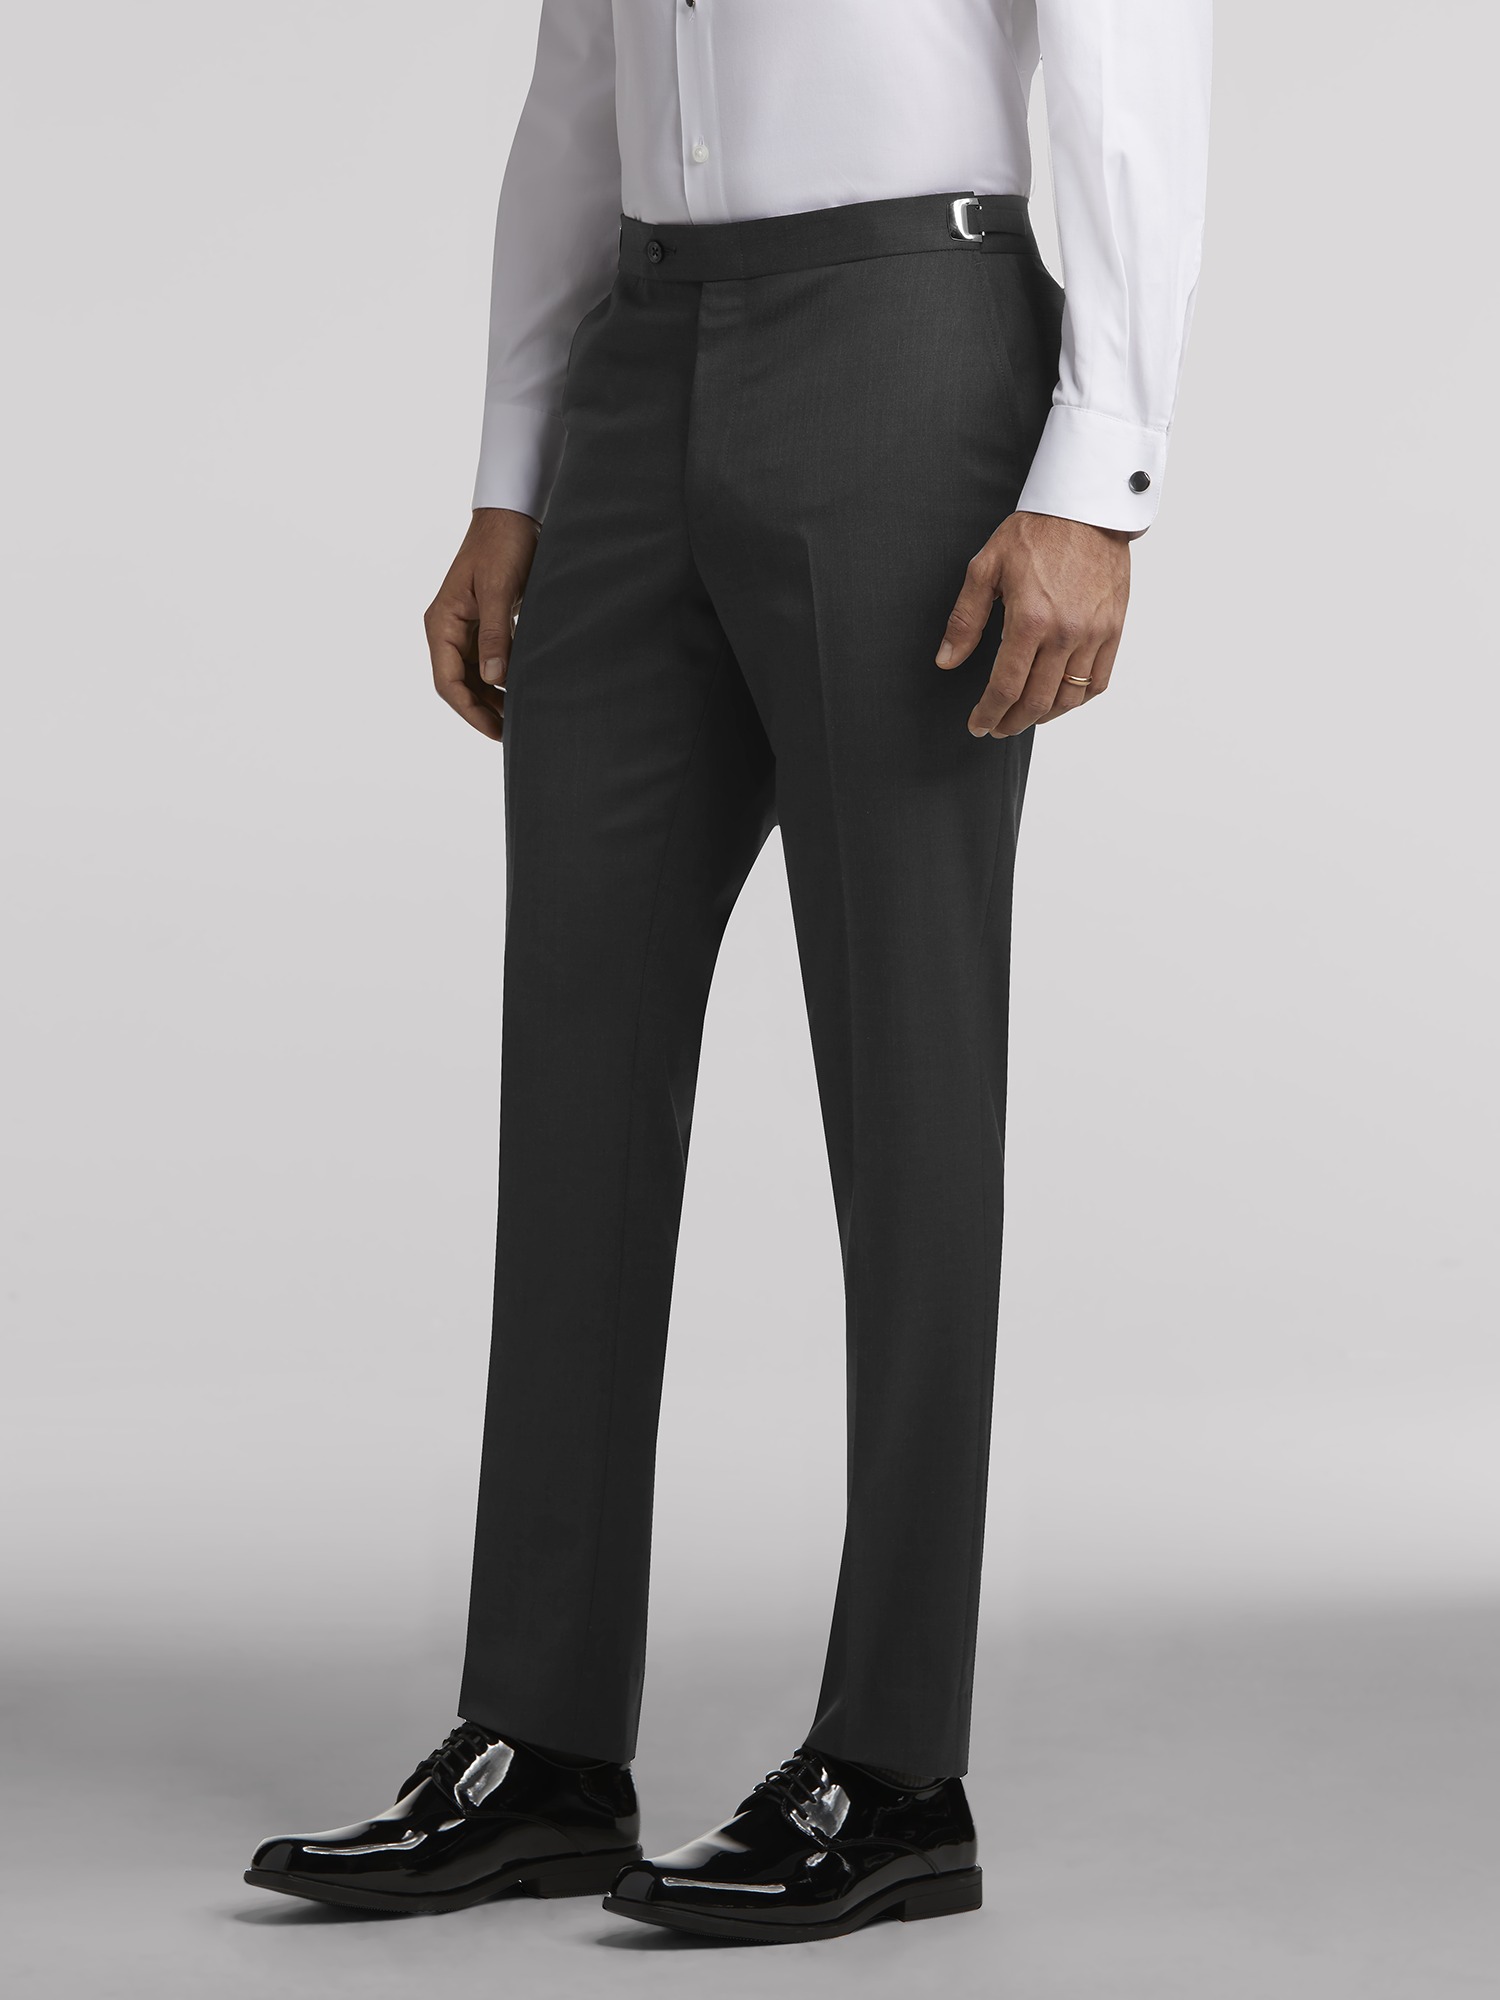 Charcoal Performance Tuxedo by Calvin Klein | Tuxedo Rental